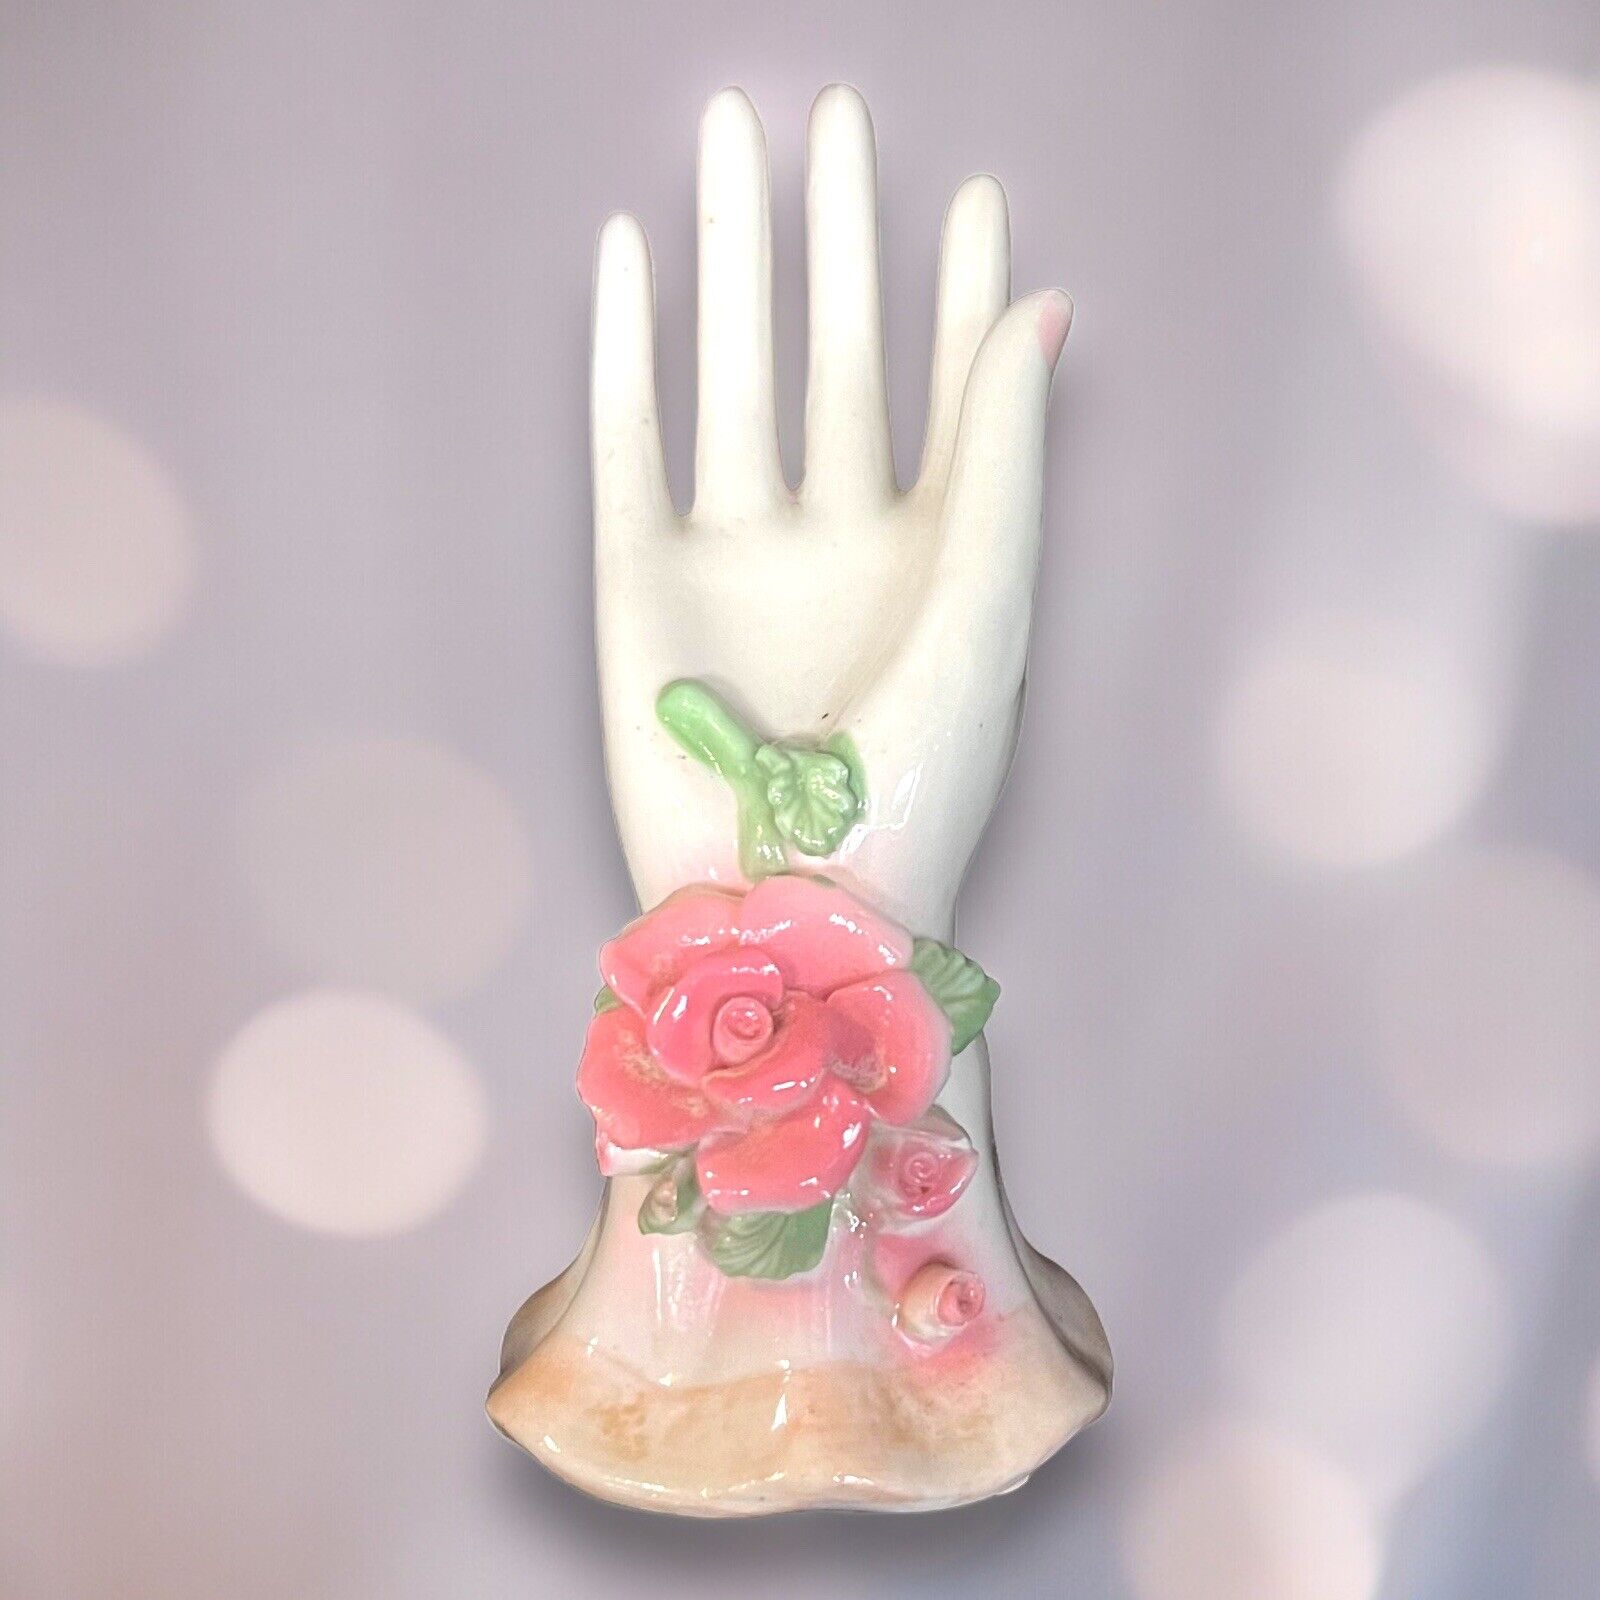 Vintage Porcelain Hand Ring Holder Figurine White with Pink Roses MCM Vanity